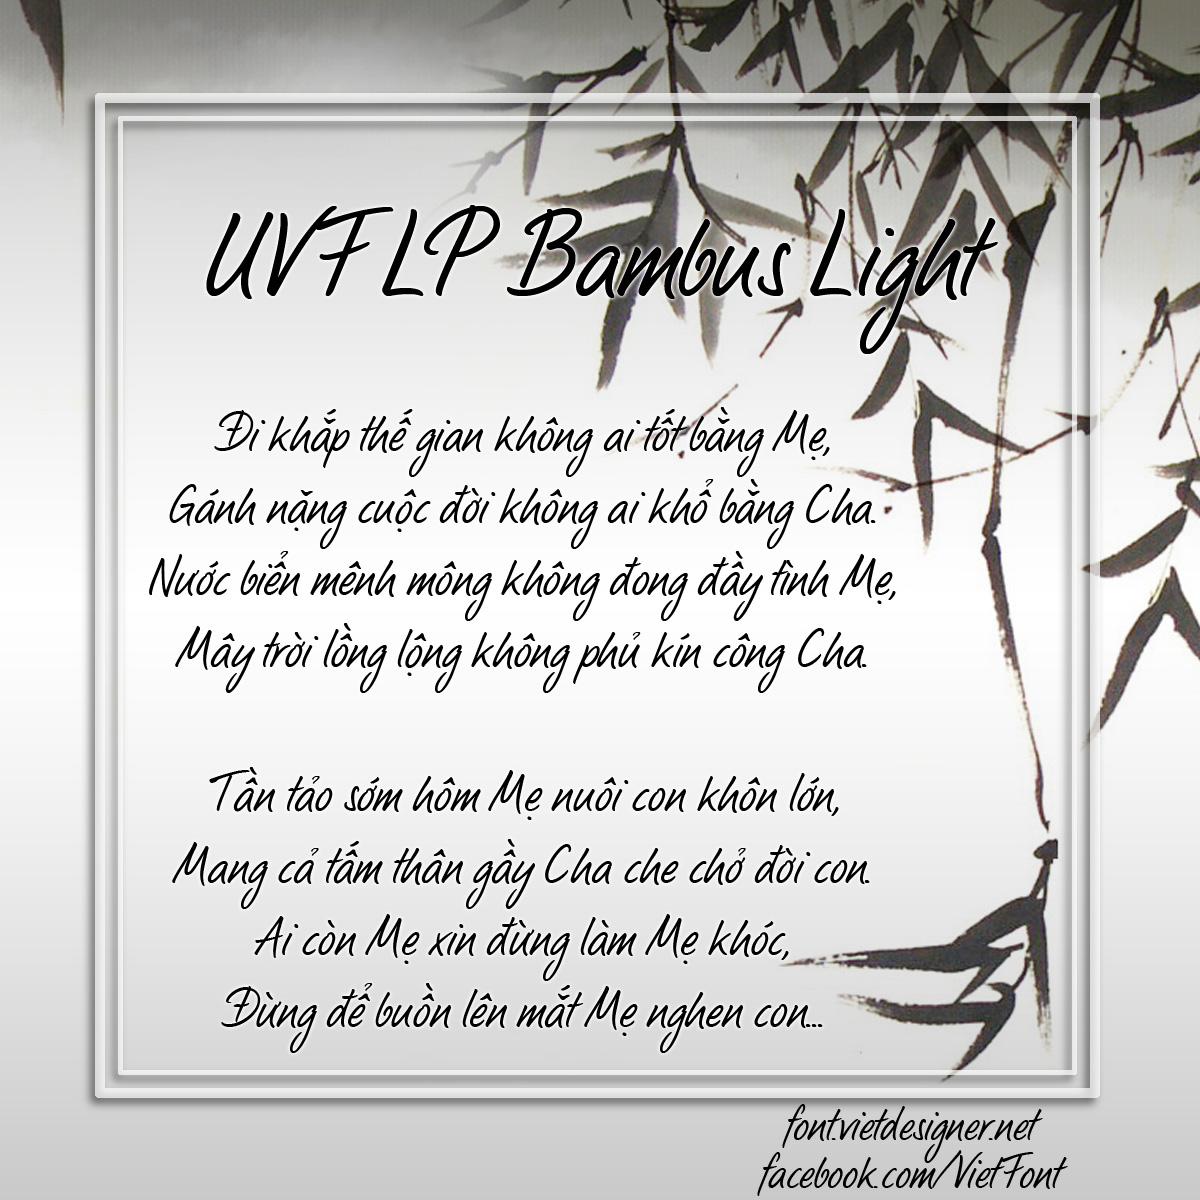 UVF LP Bambus Light